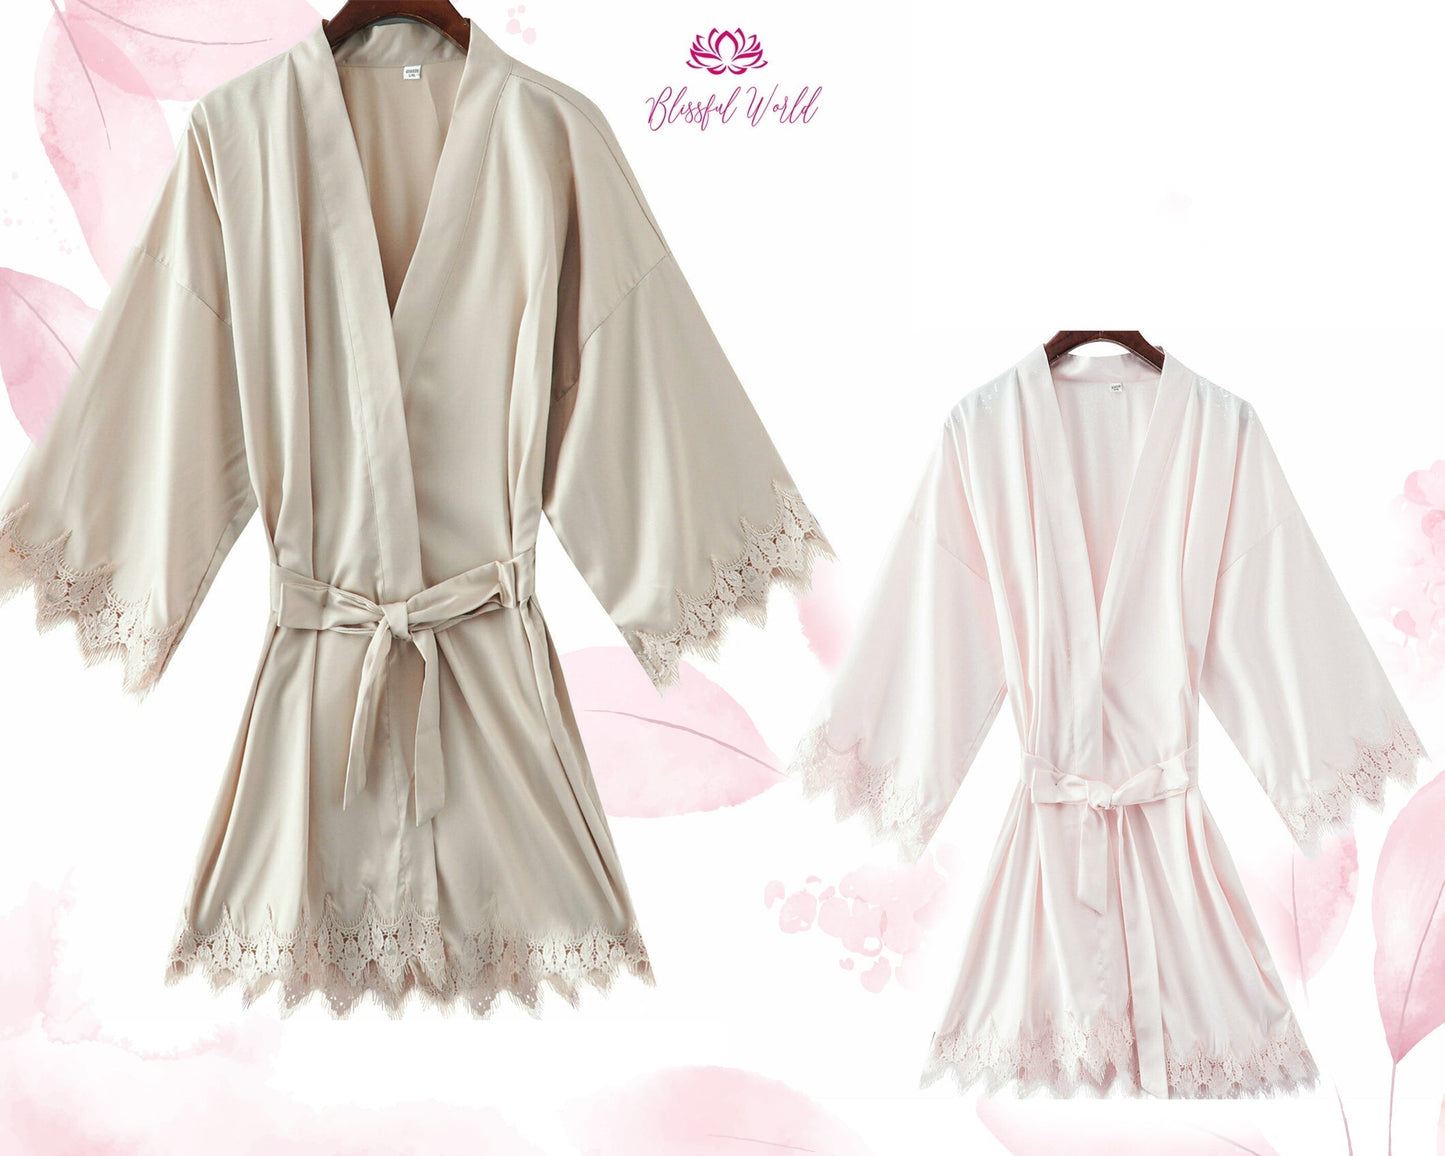 Satin Ruffle Bridal Robe Silky Bridesmaid Robes / Wedding Bridesmaid Gift / Bridal Party Robes / Personalized / Custom Robes / Robe/ Lace with Trim